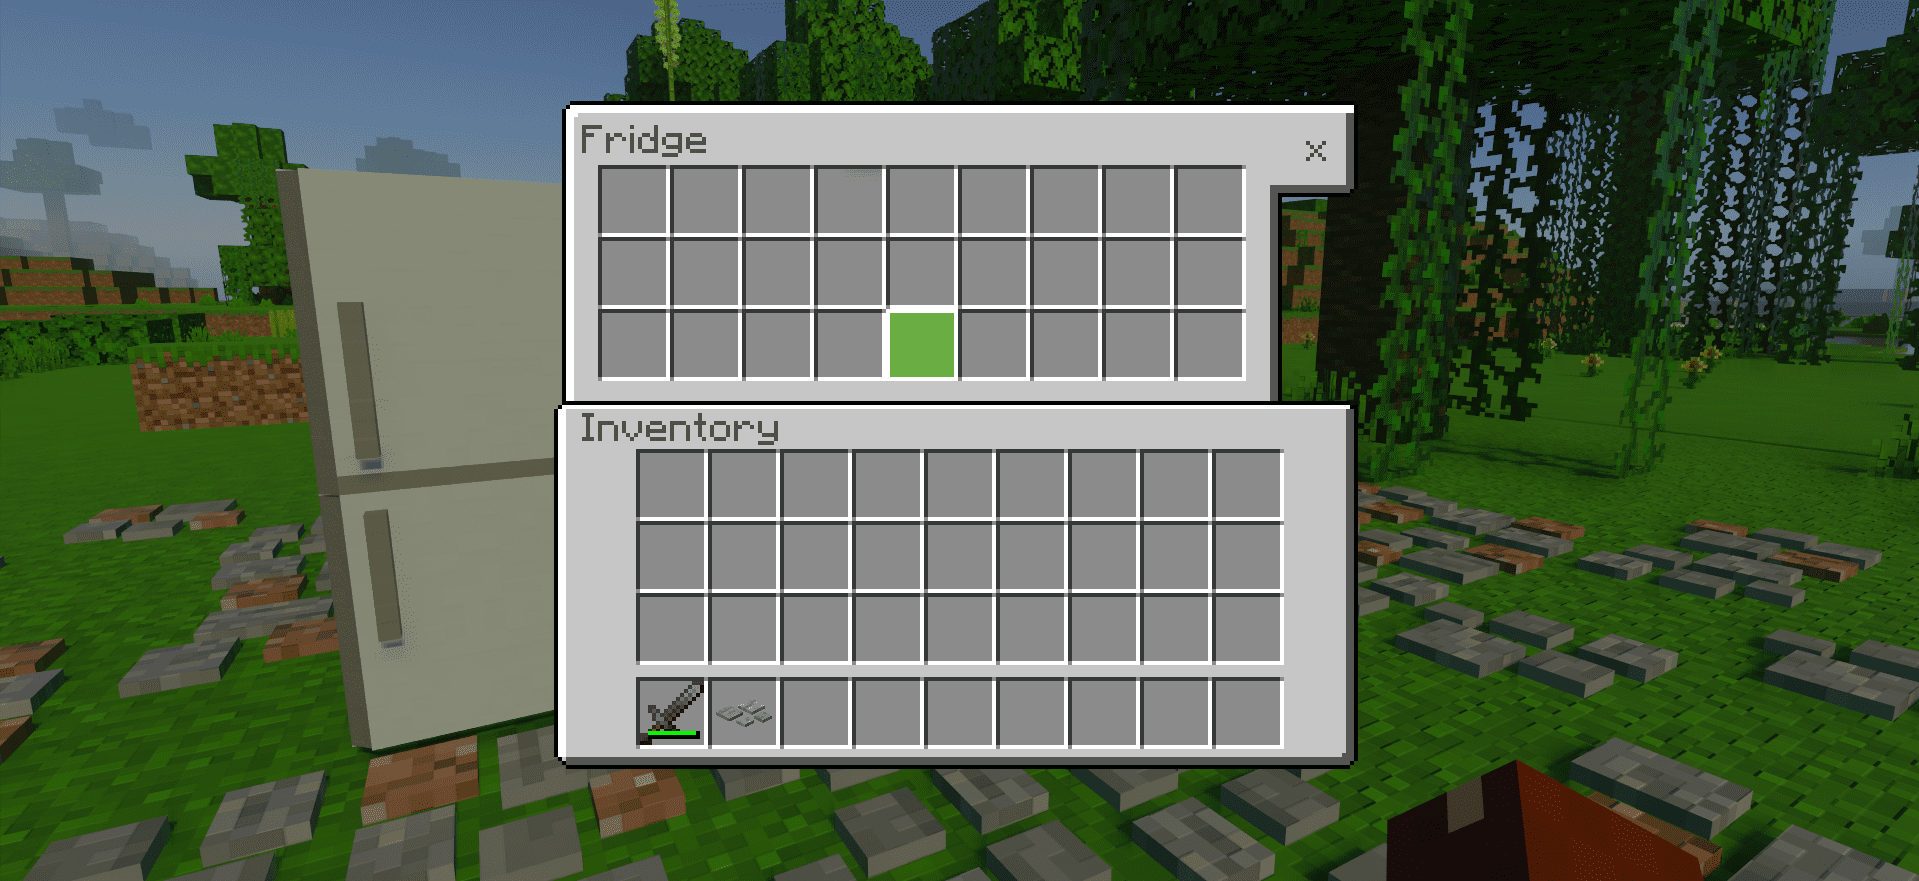 Fridge inventory slots